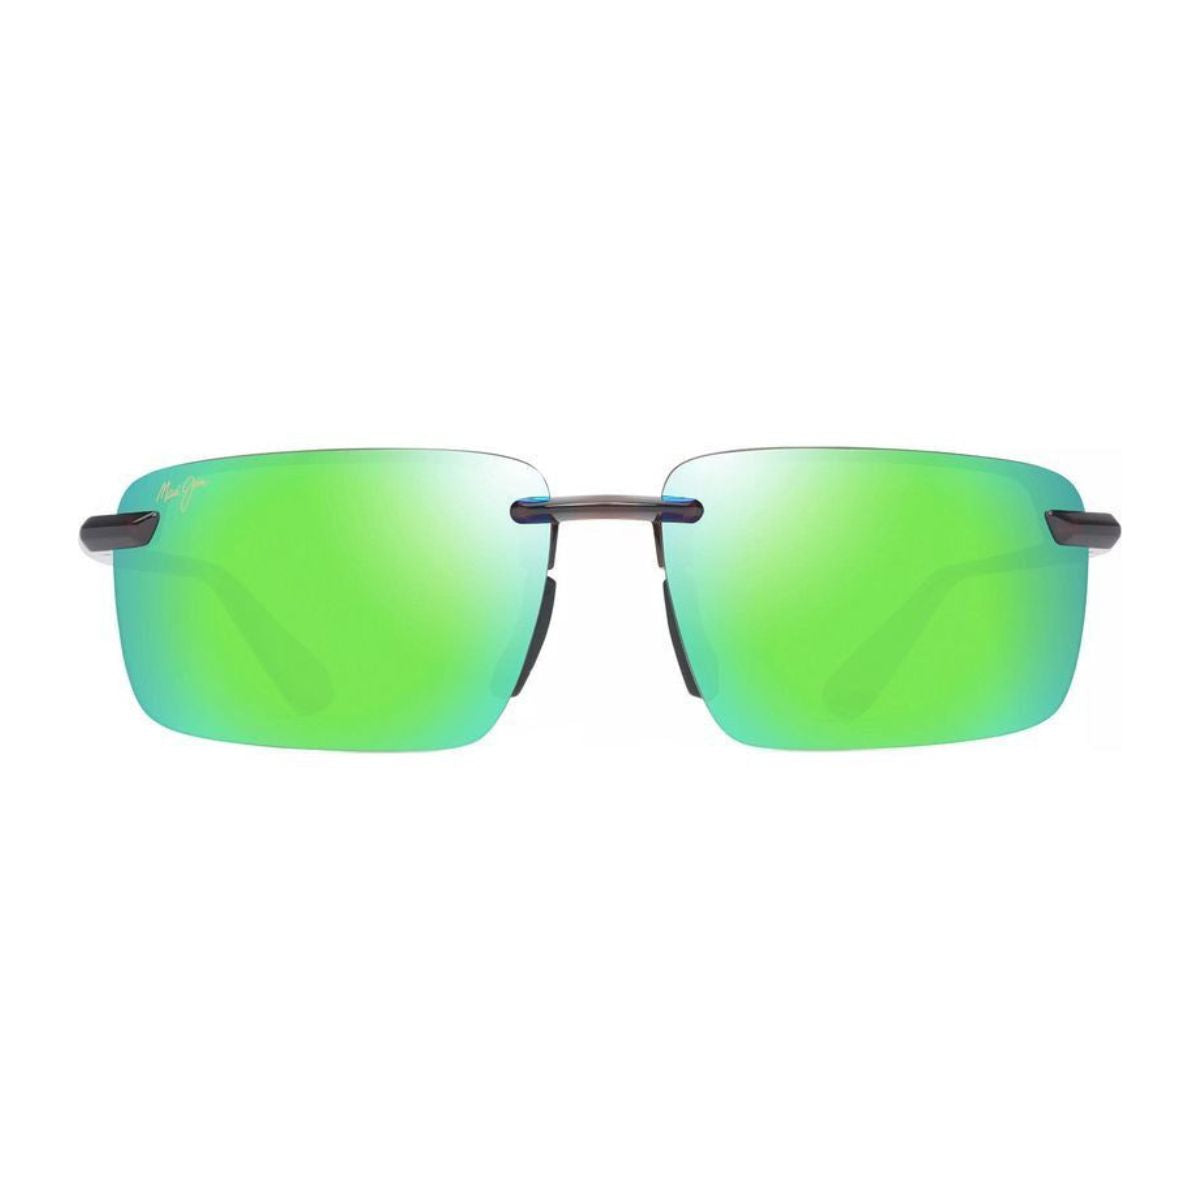 "Buy Maui Jim PolarizedPlus2 Square Rimless Sunglasses For Mens At Optorium"